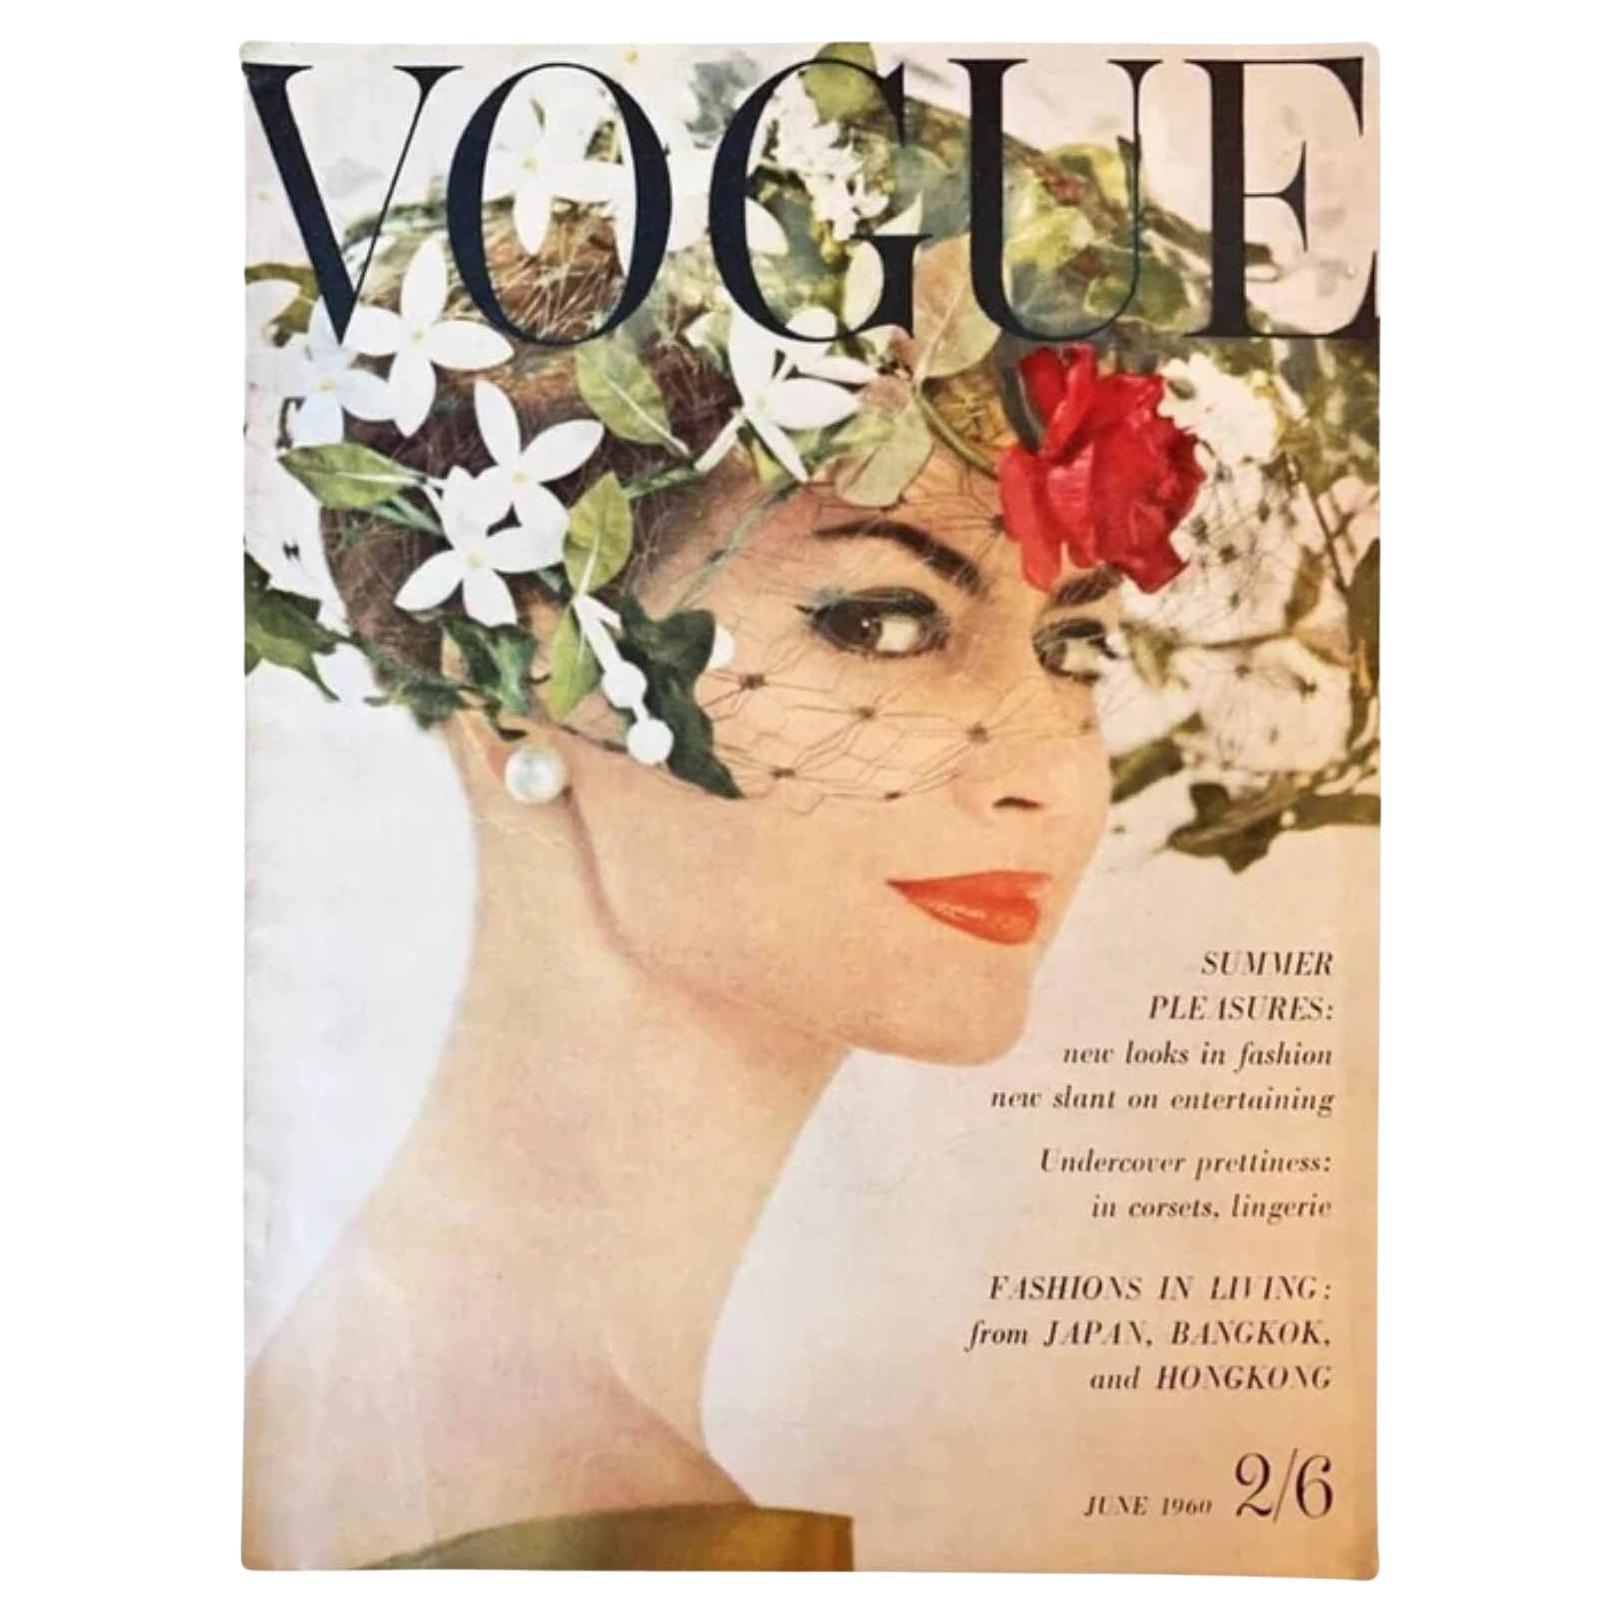 1960 Vogue - Summer Pleasures, Undercover Prettiness